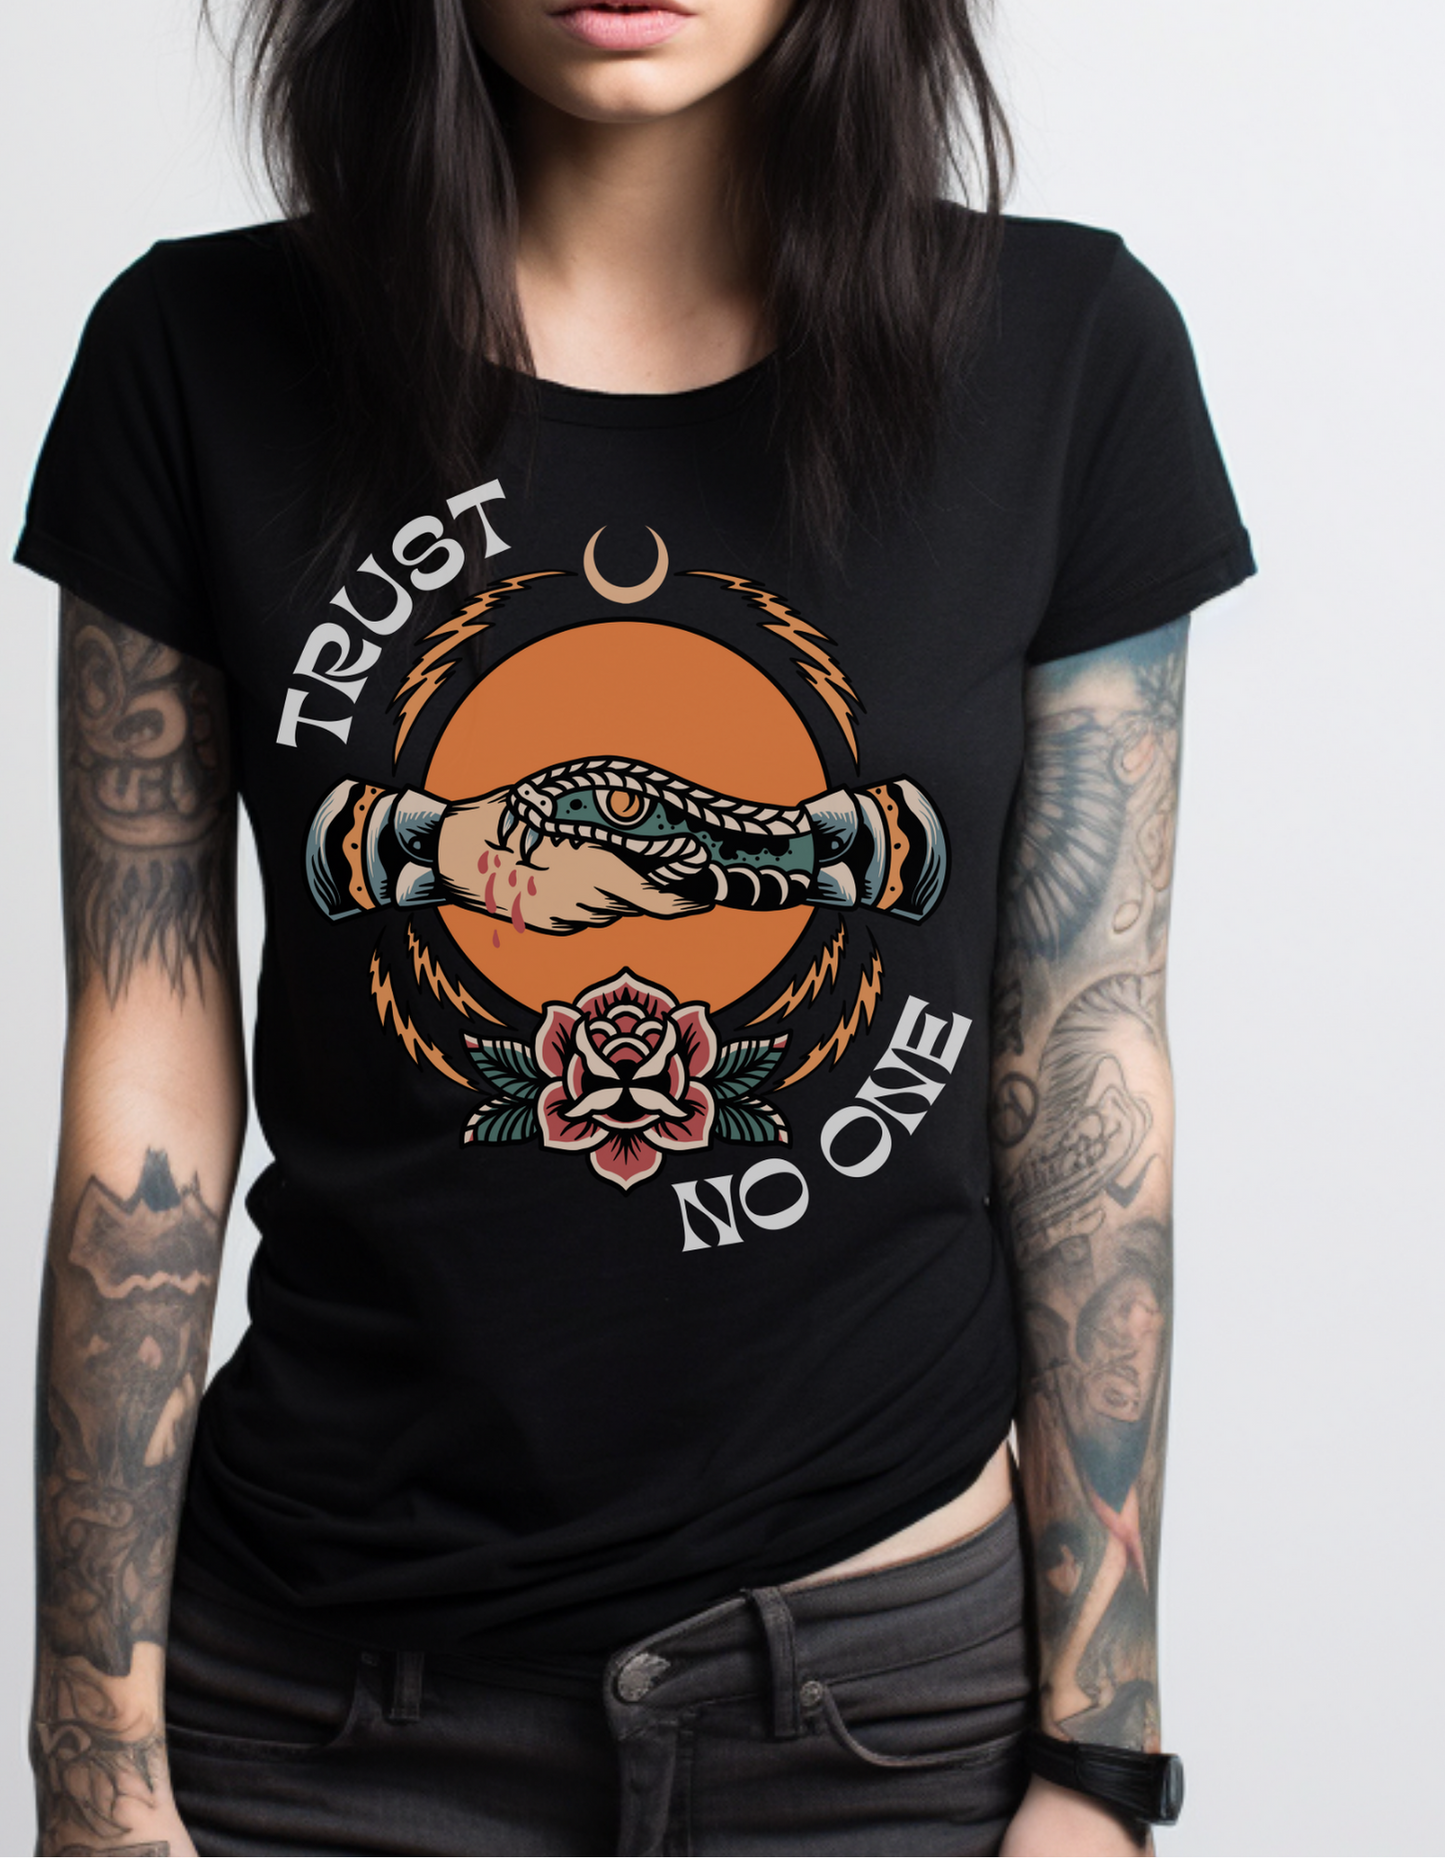 Trust No One Snake Bite Tattoo T-shirt / Unisex Vintage American Old School Traditional Tattoo Flash Tee Shirt / Punk Rock Clothing Tshirt - Foxlark Crystal Jewelry